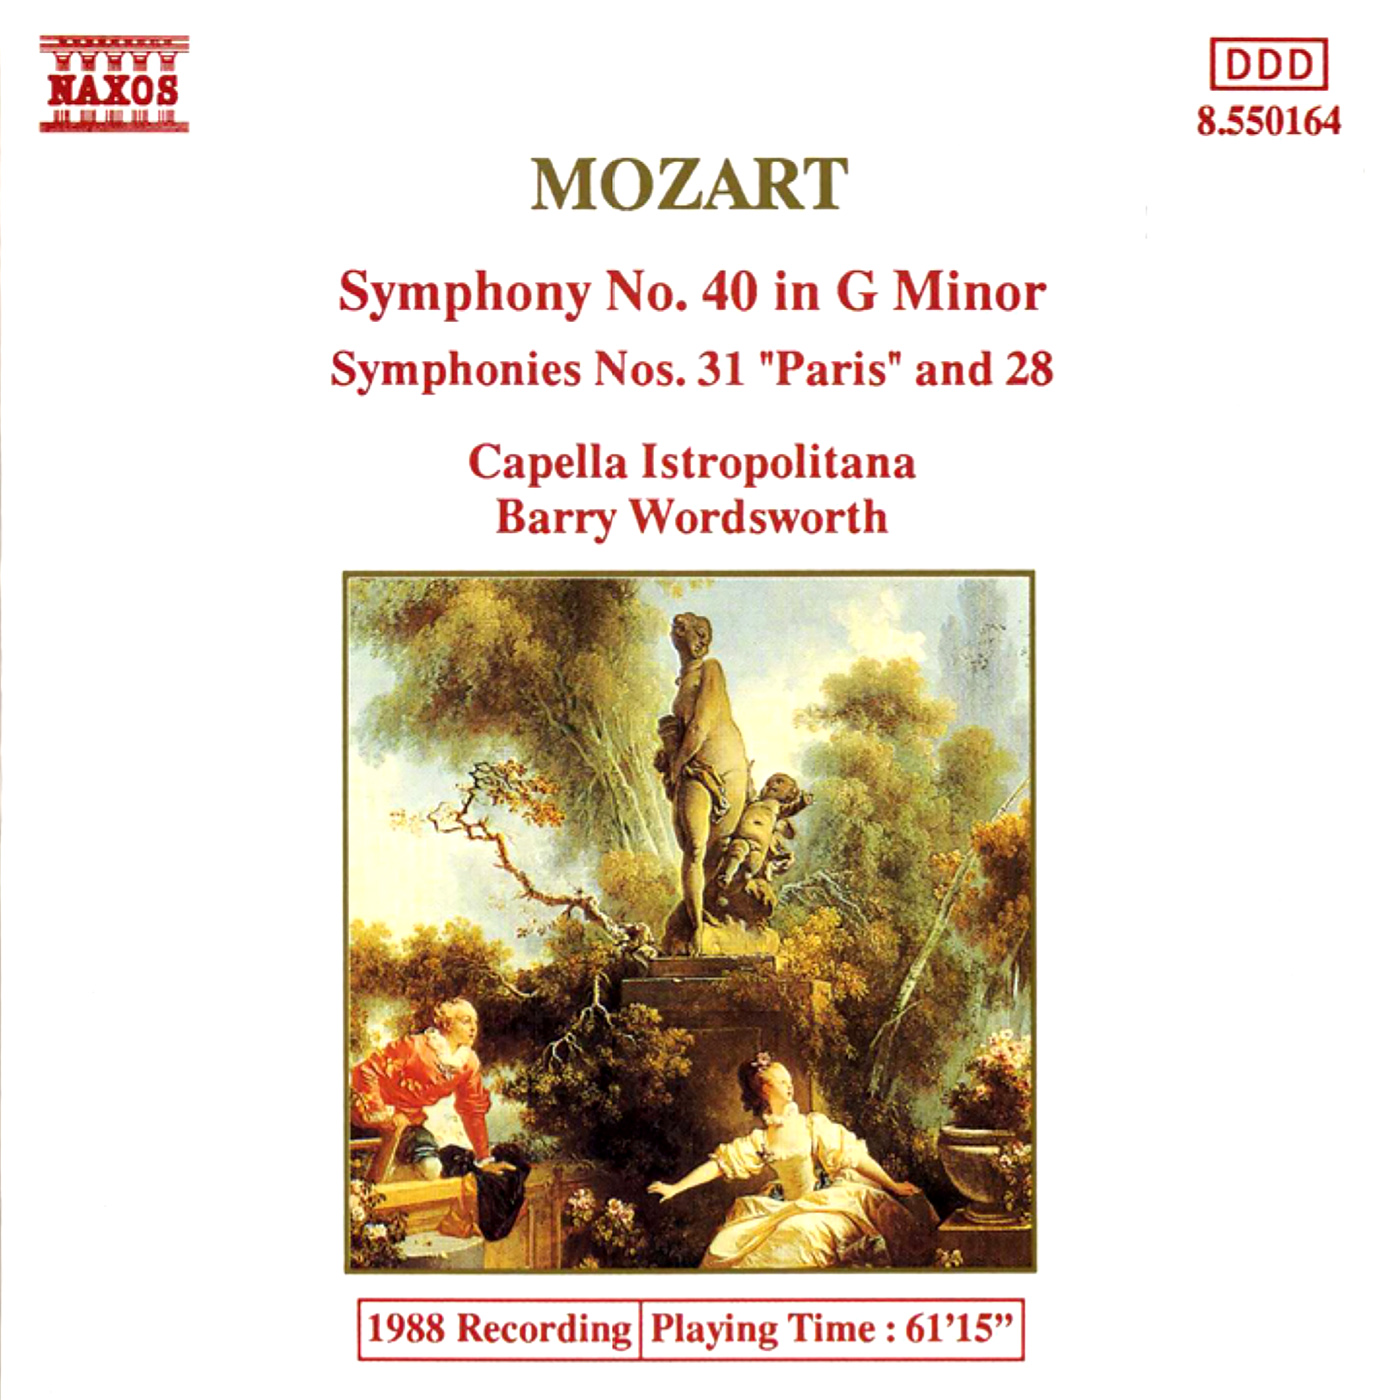 MOZART: Symphonies Nos. 40, 28 and 31